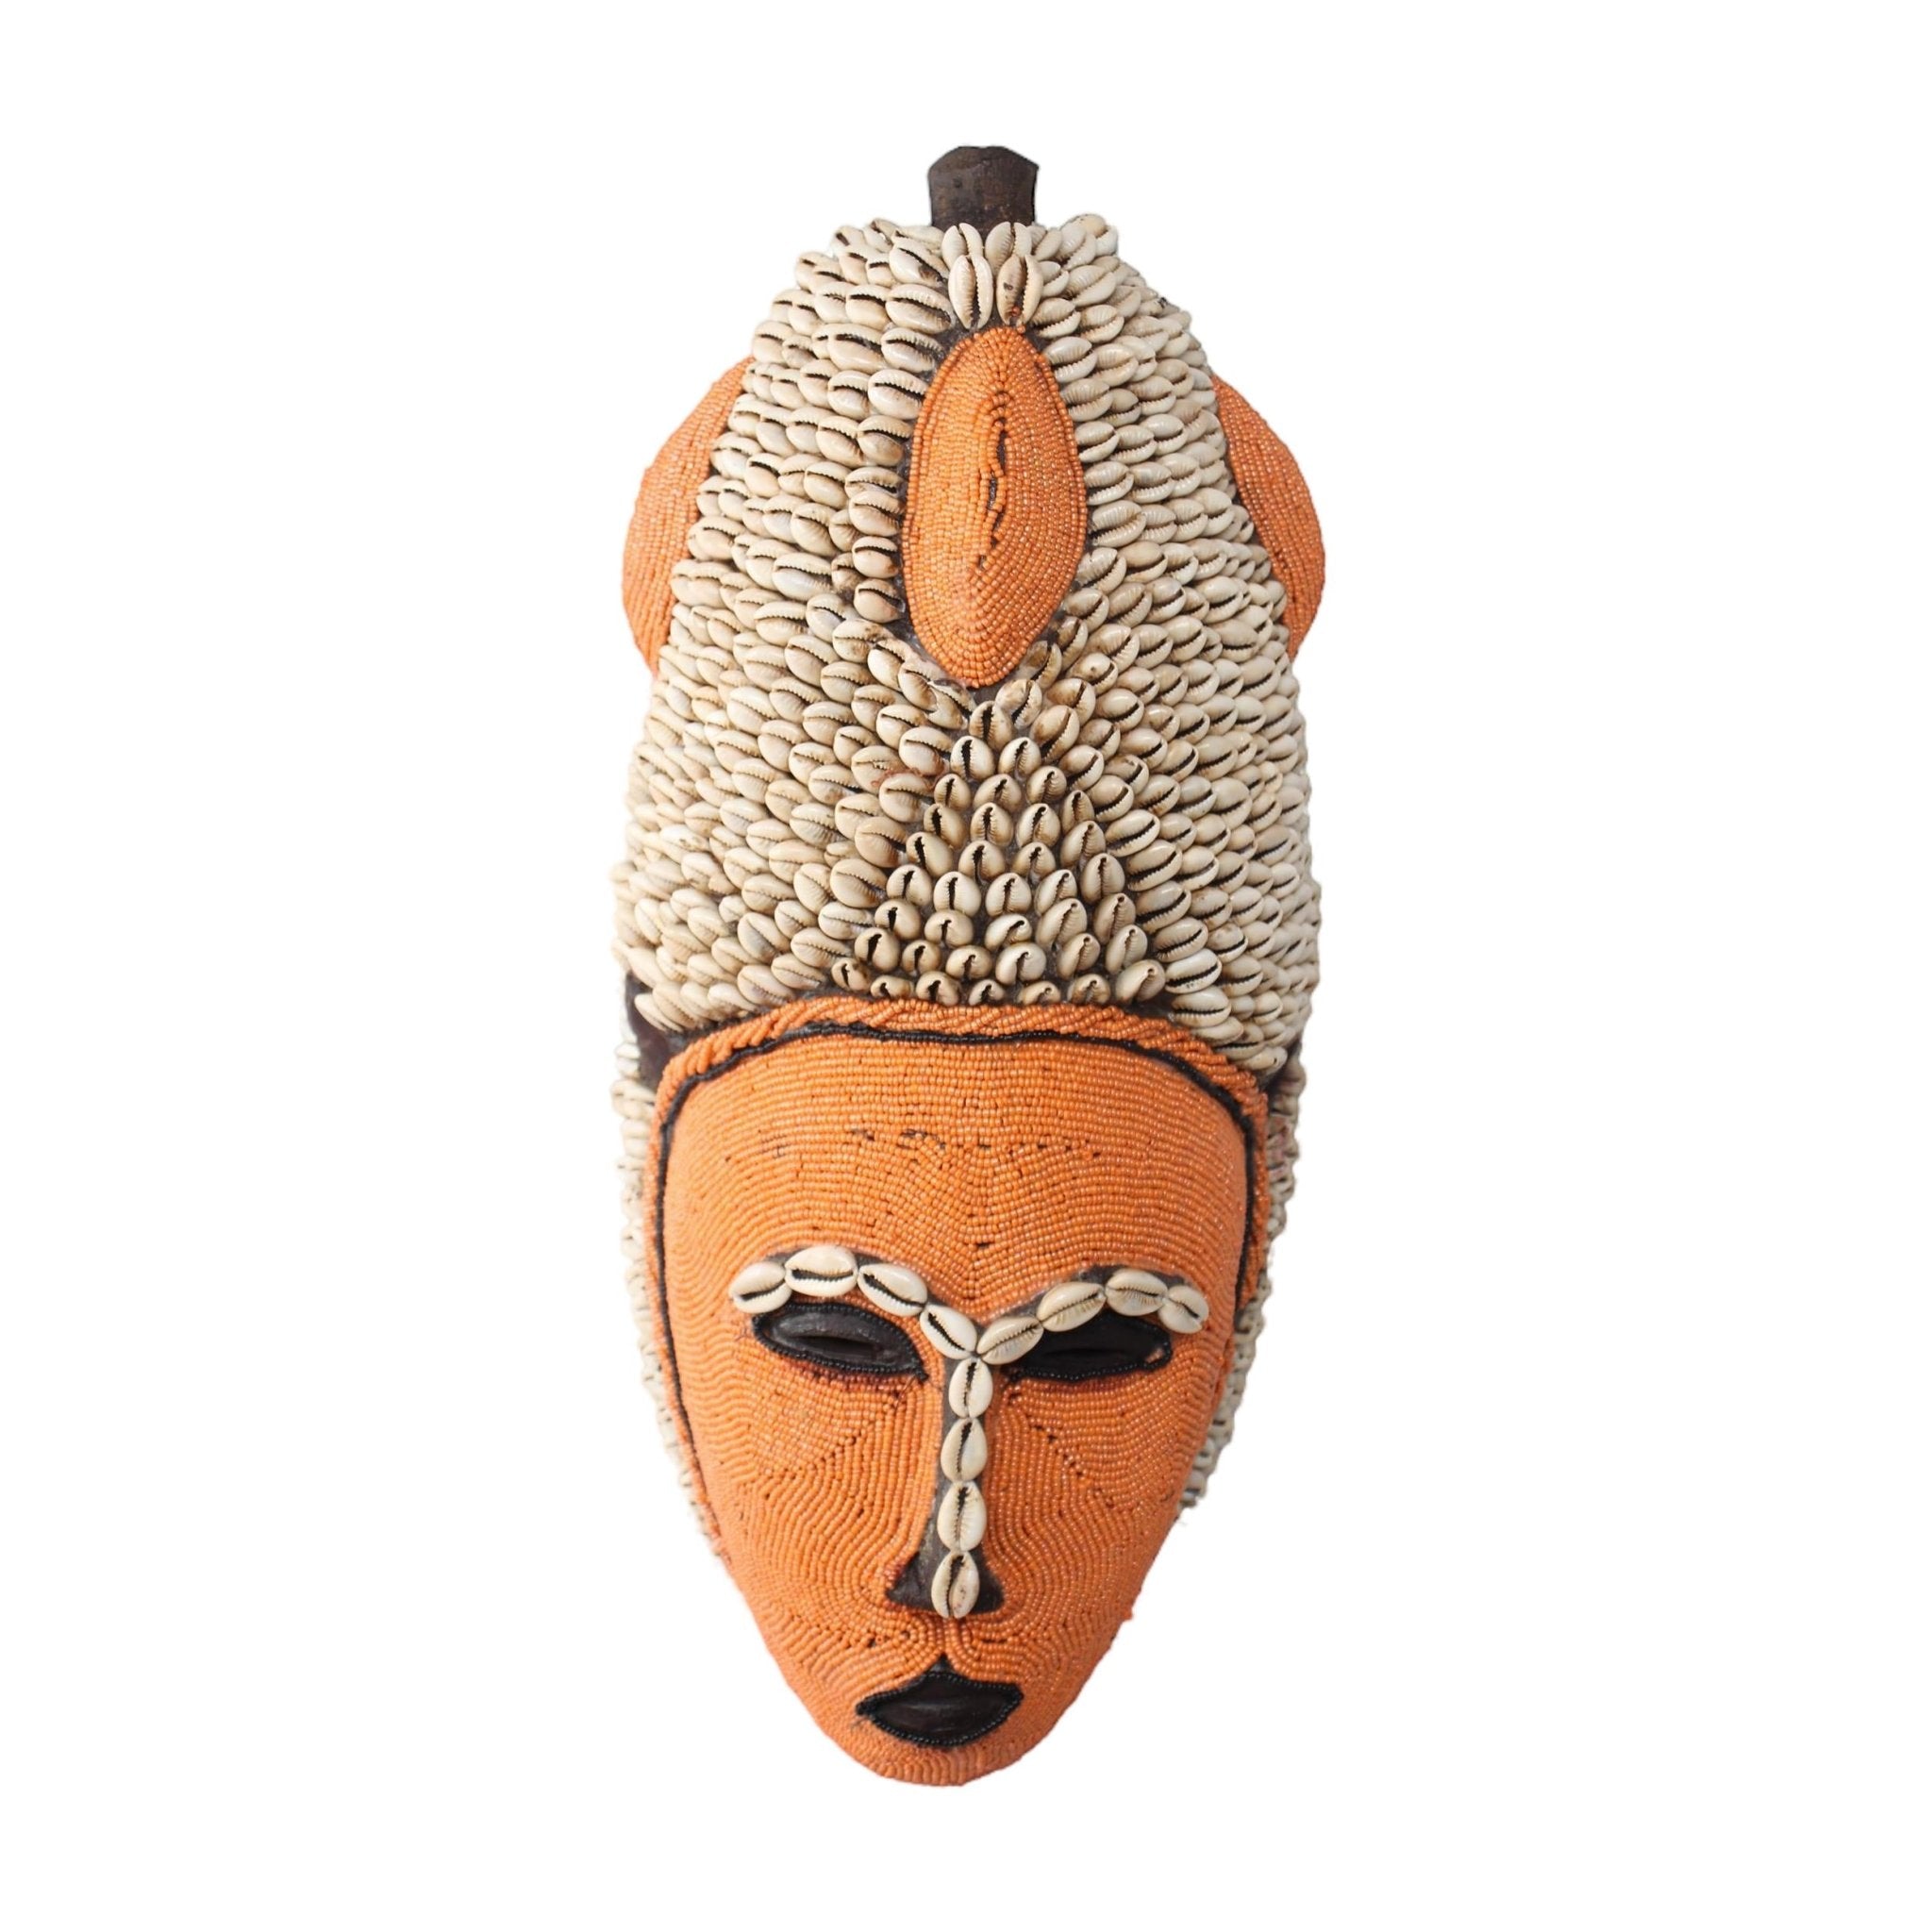 Baule Tribe Mask ~17.3" Tall - African Angel Art - Mask